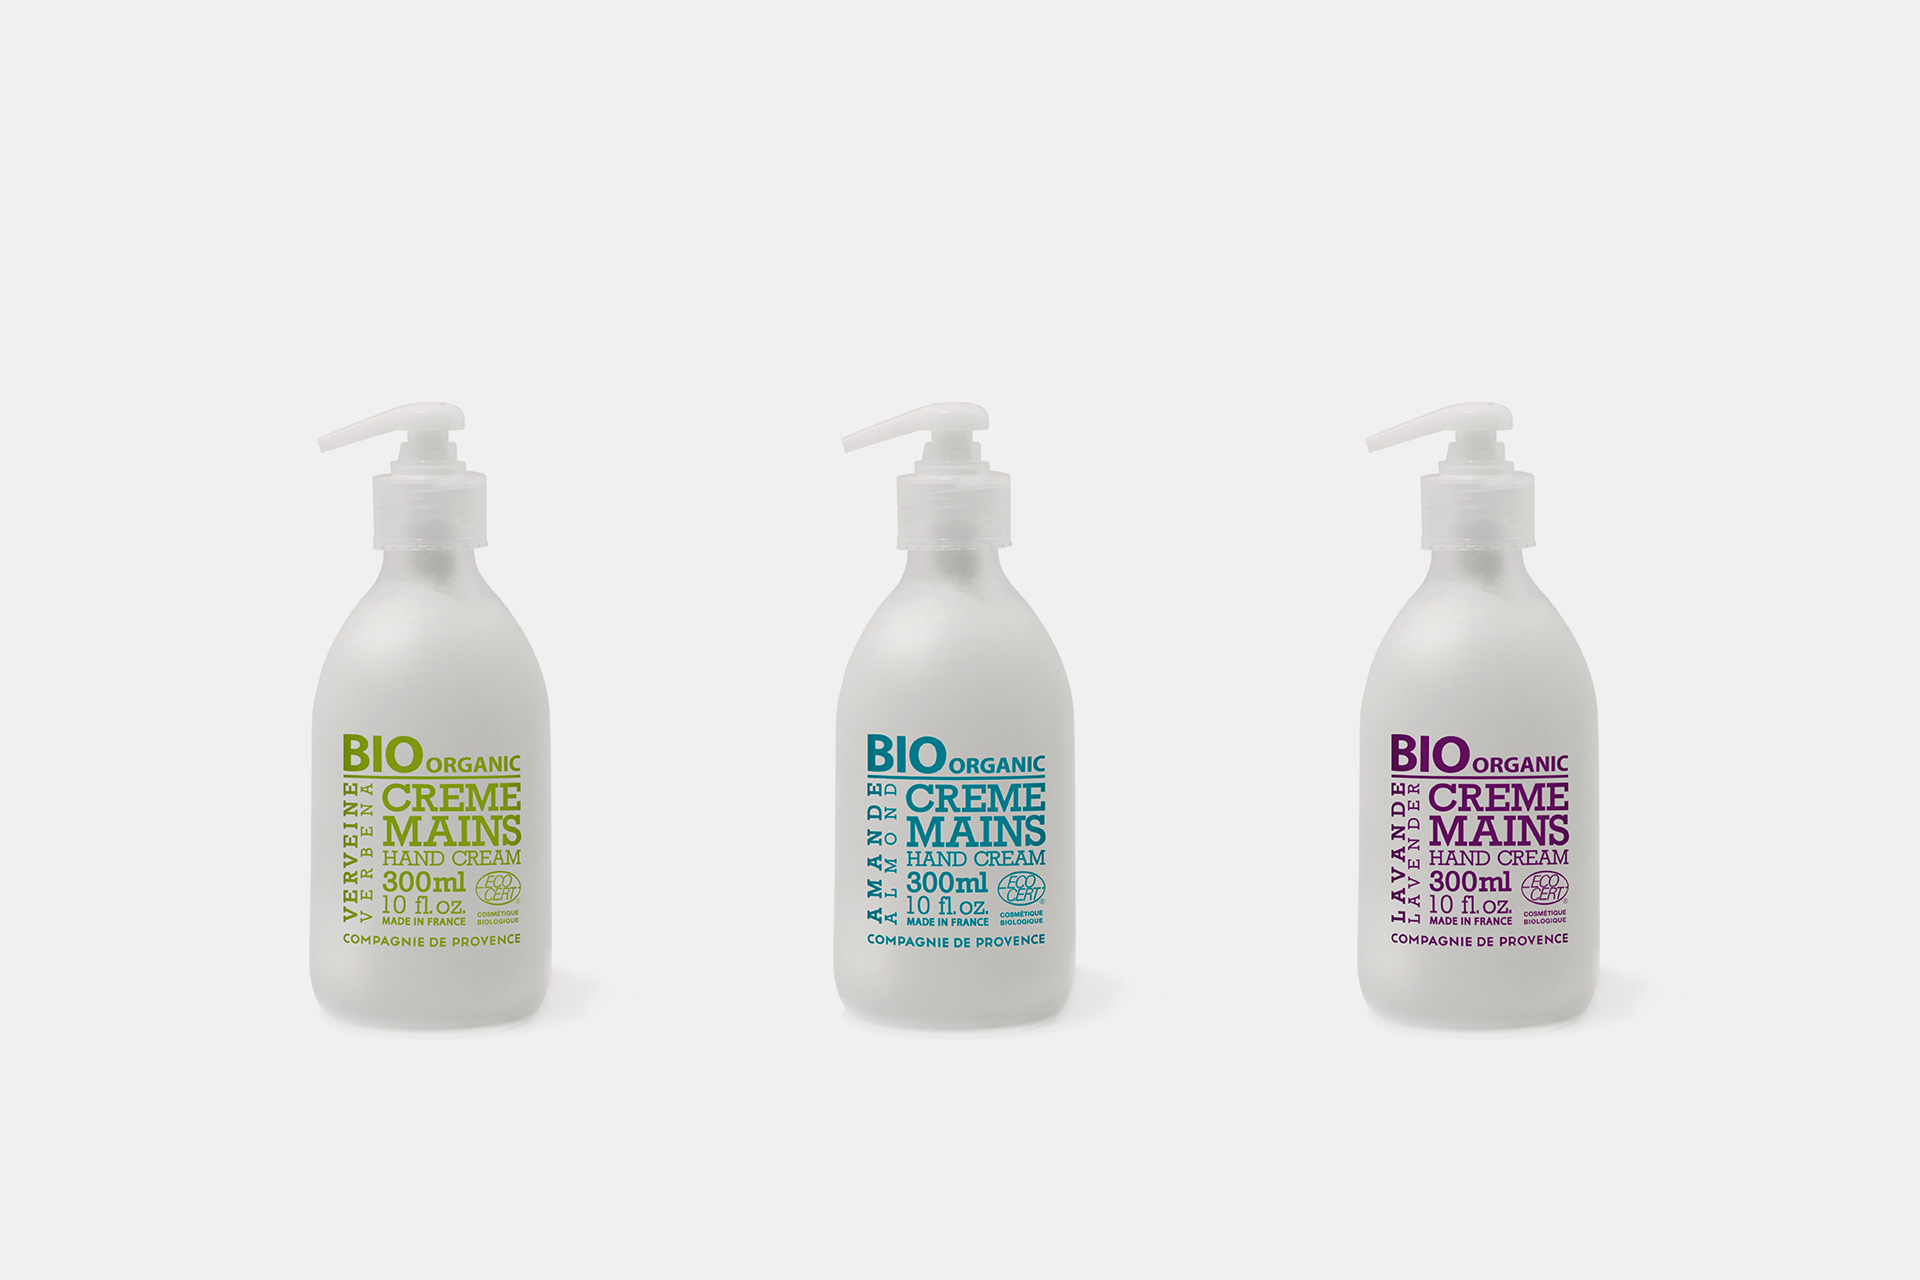 la-compagnie-de-provence-packaging-savon-plastac-bio-organic